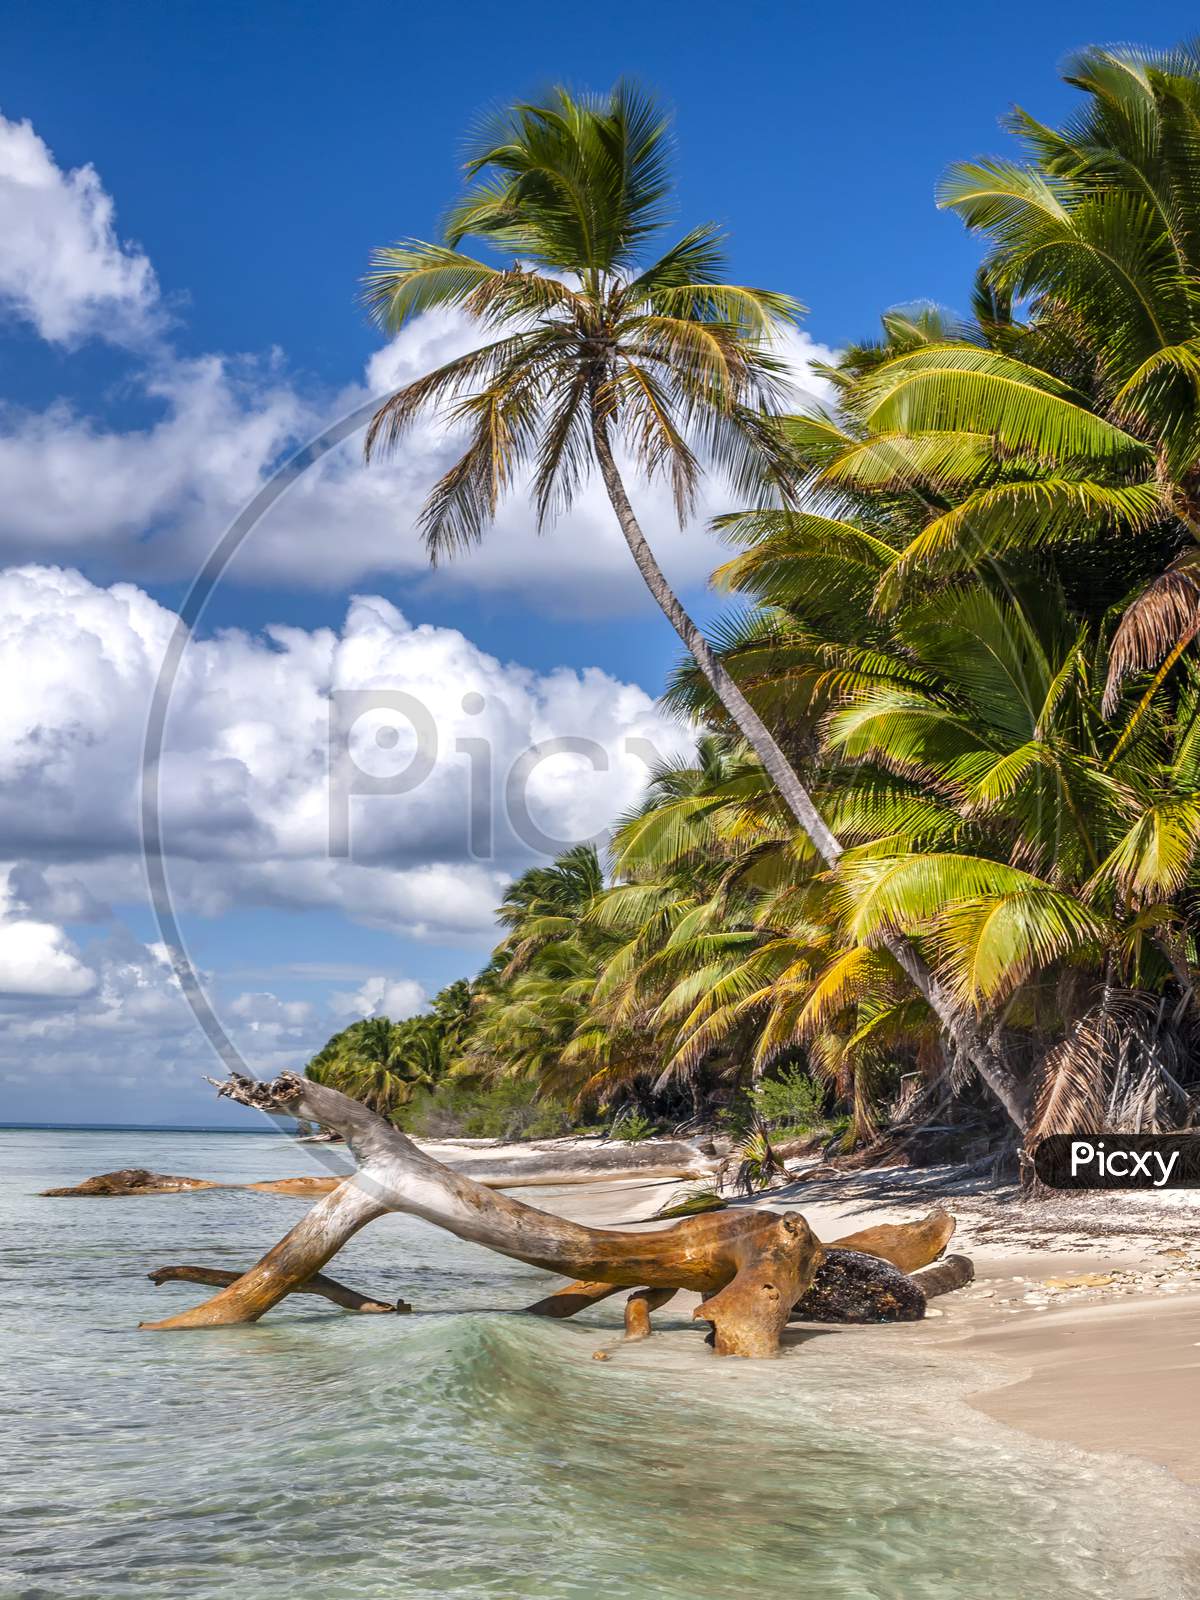 Caribbean beach with some drift wood.